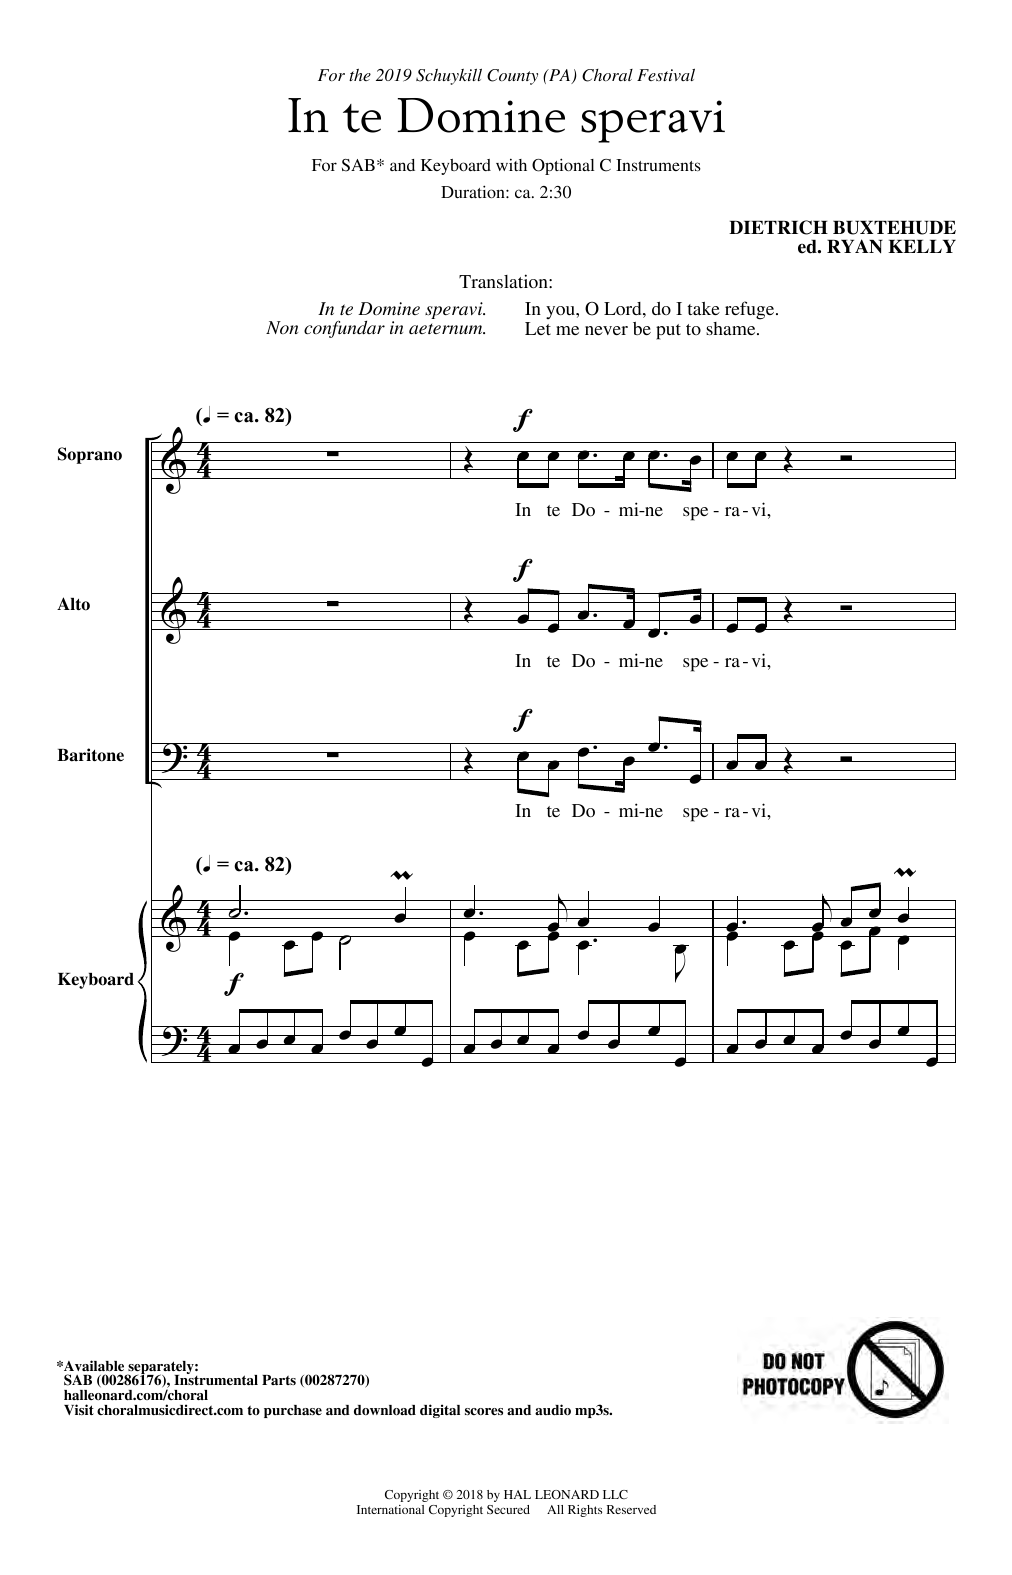 Dietrich Buxtehude In Te Domine Speravi (ed. Ryan Kelly) sheet music notes and chords arranged for SAB Choir